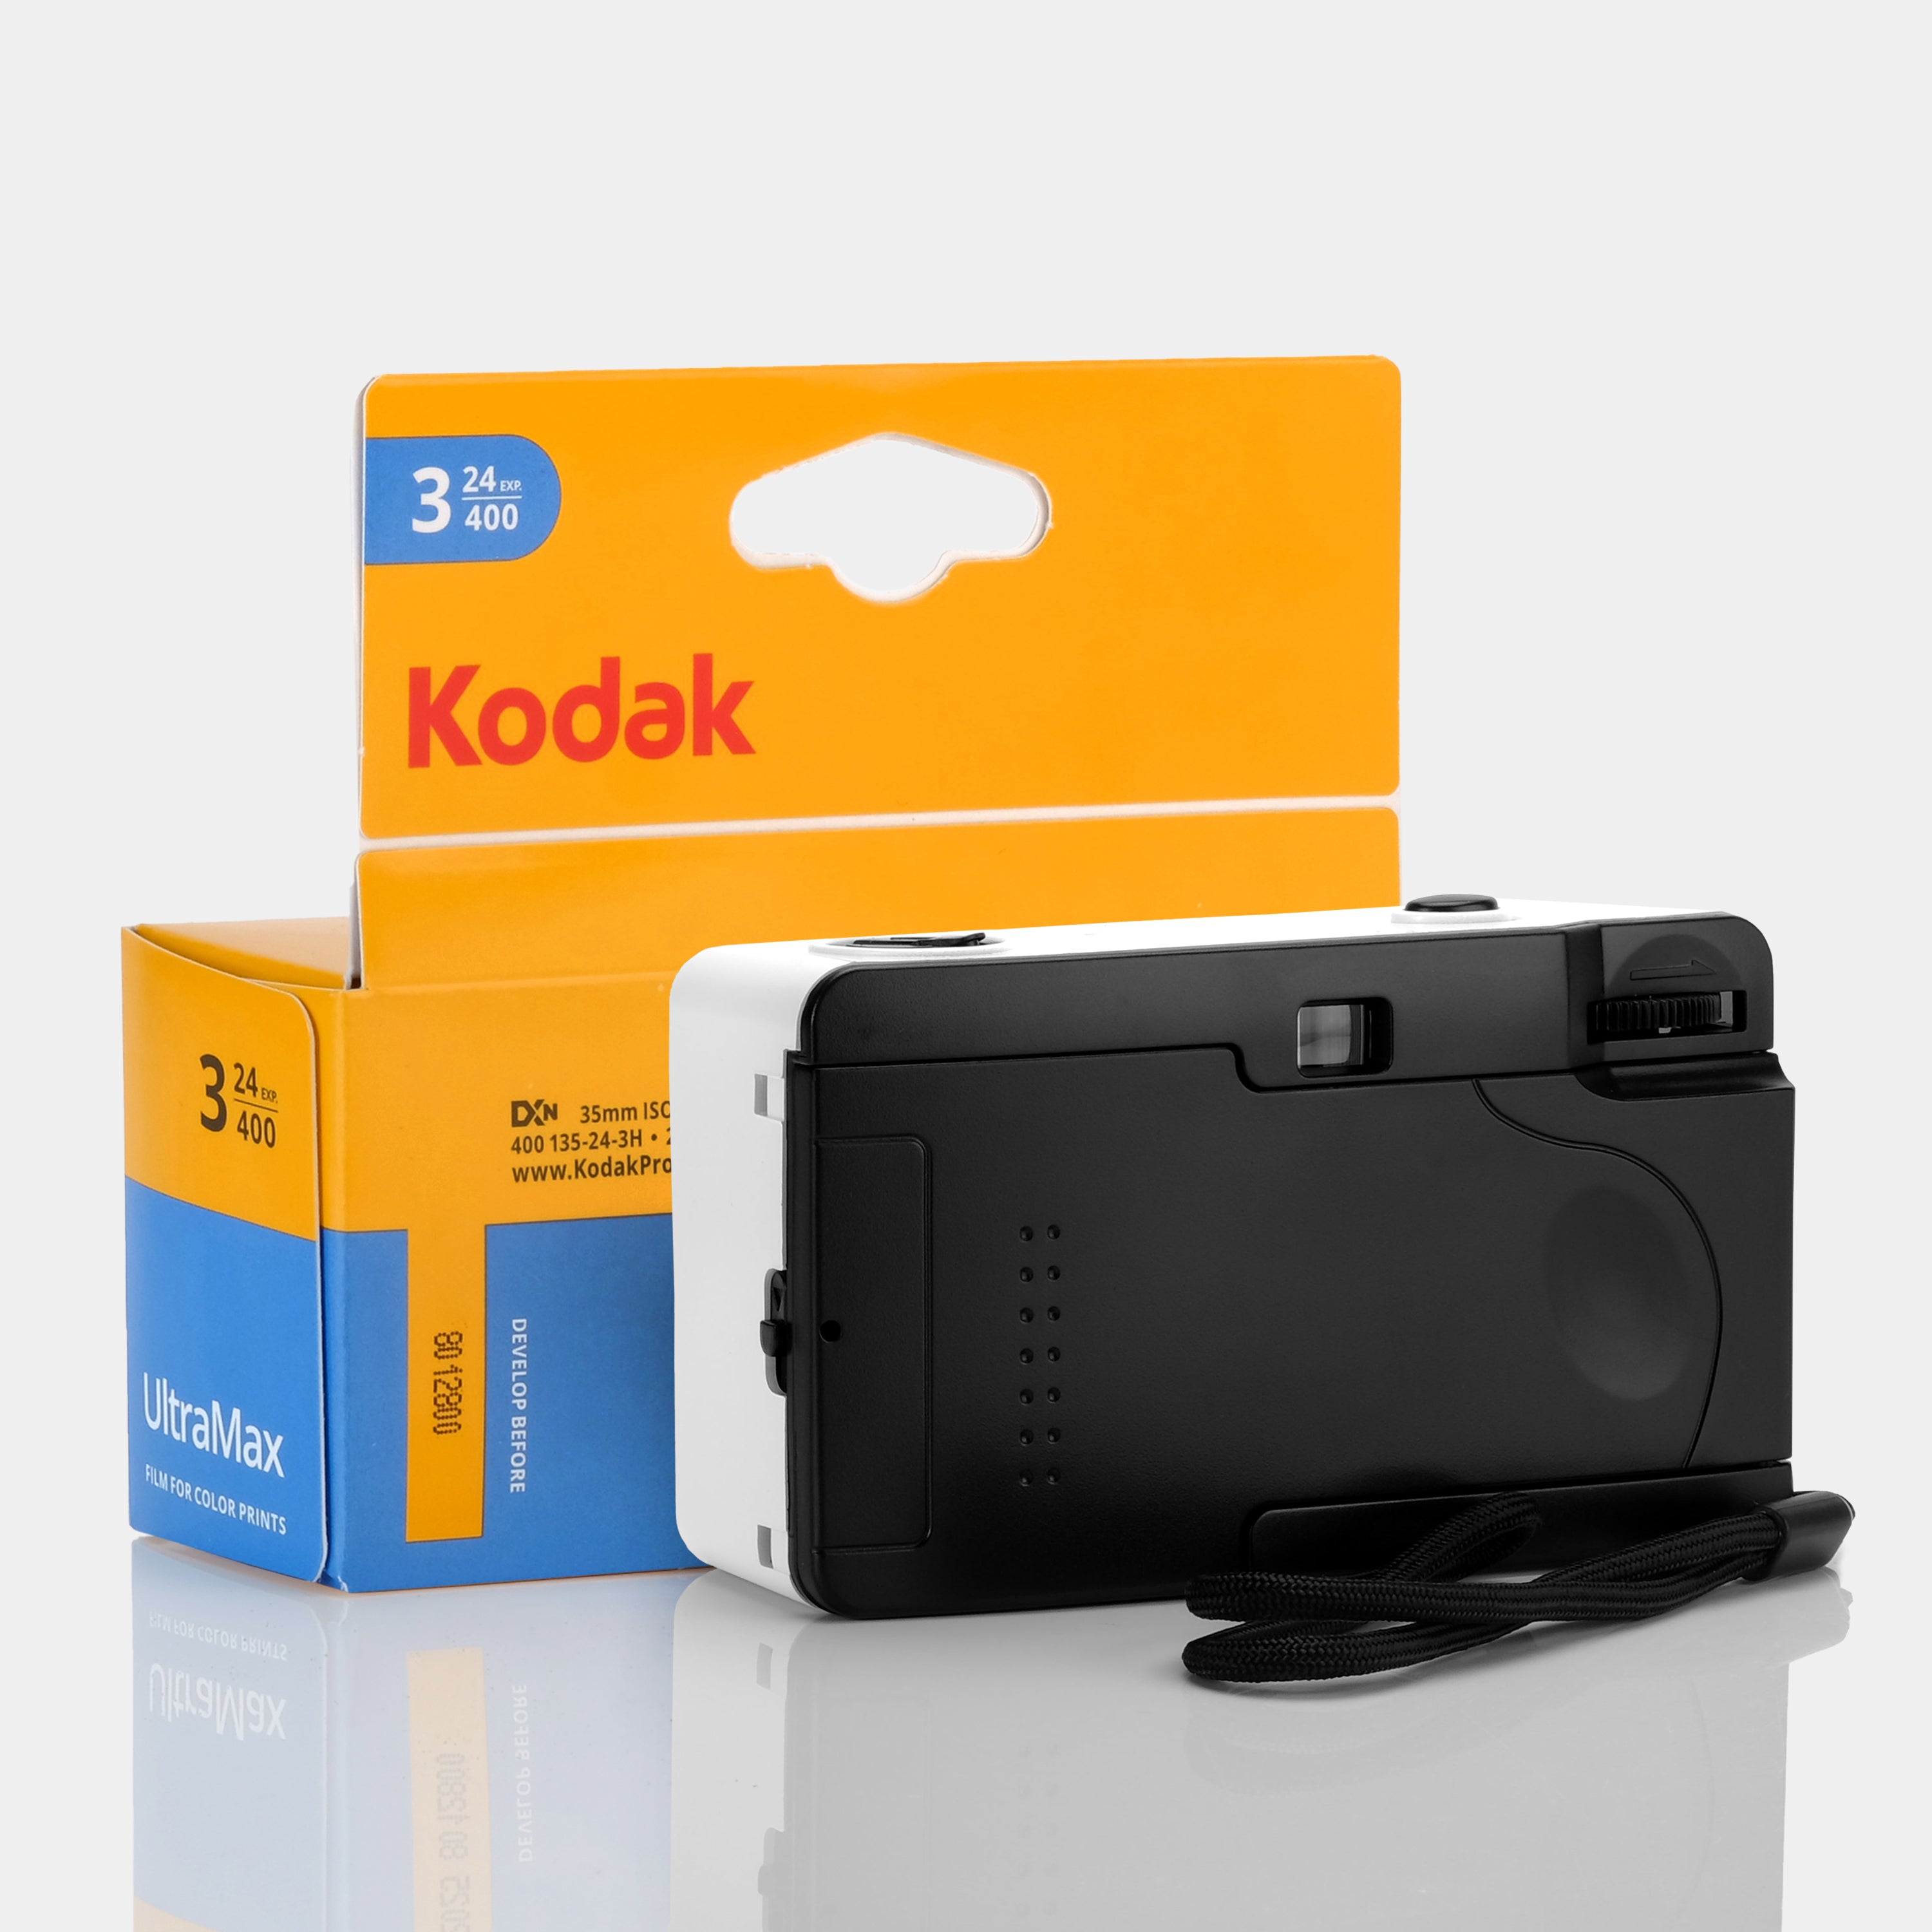 Kodak M38 Reusable 35mm Point and Shoot White Camera With 3-Pack Kodak UltraMax Film